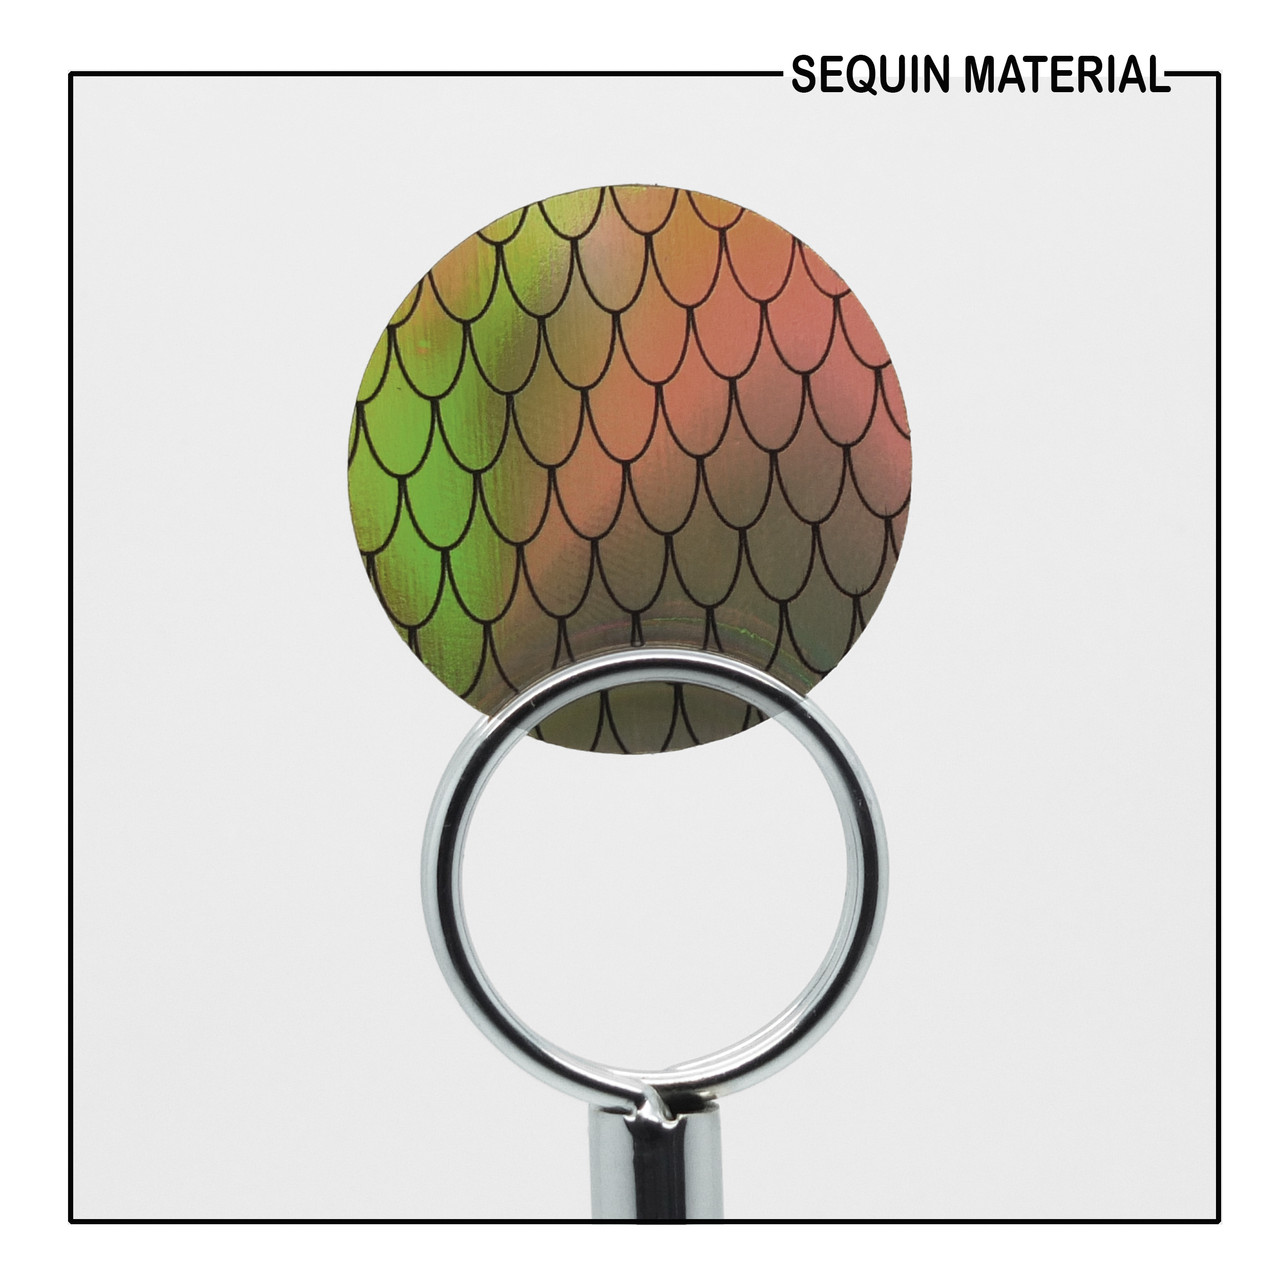 SequinsUSA Black Gold Fish Scale Skin Effect  Print Lazersheen Reflective Metallic Sequin Material RL519